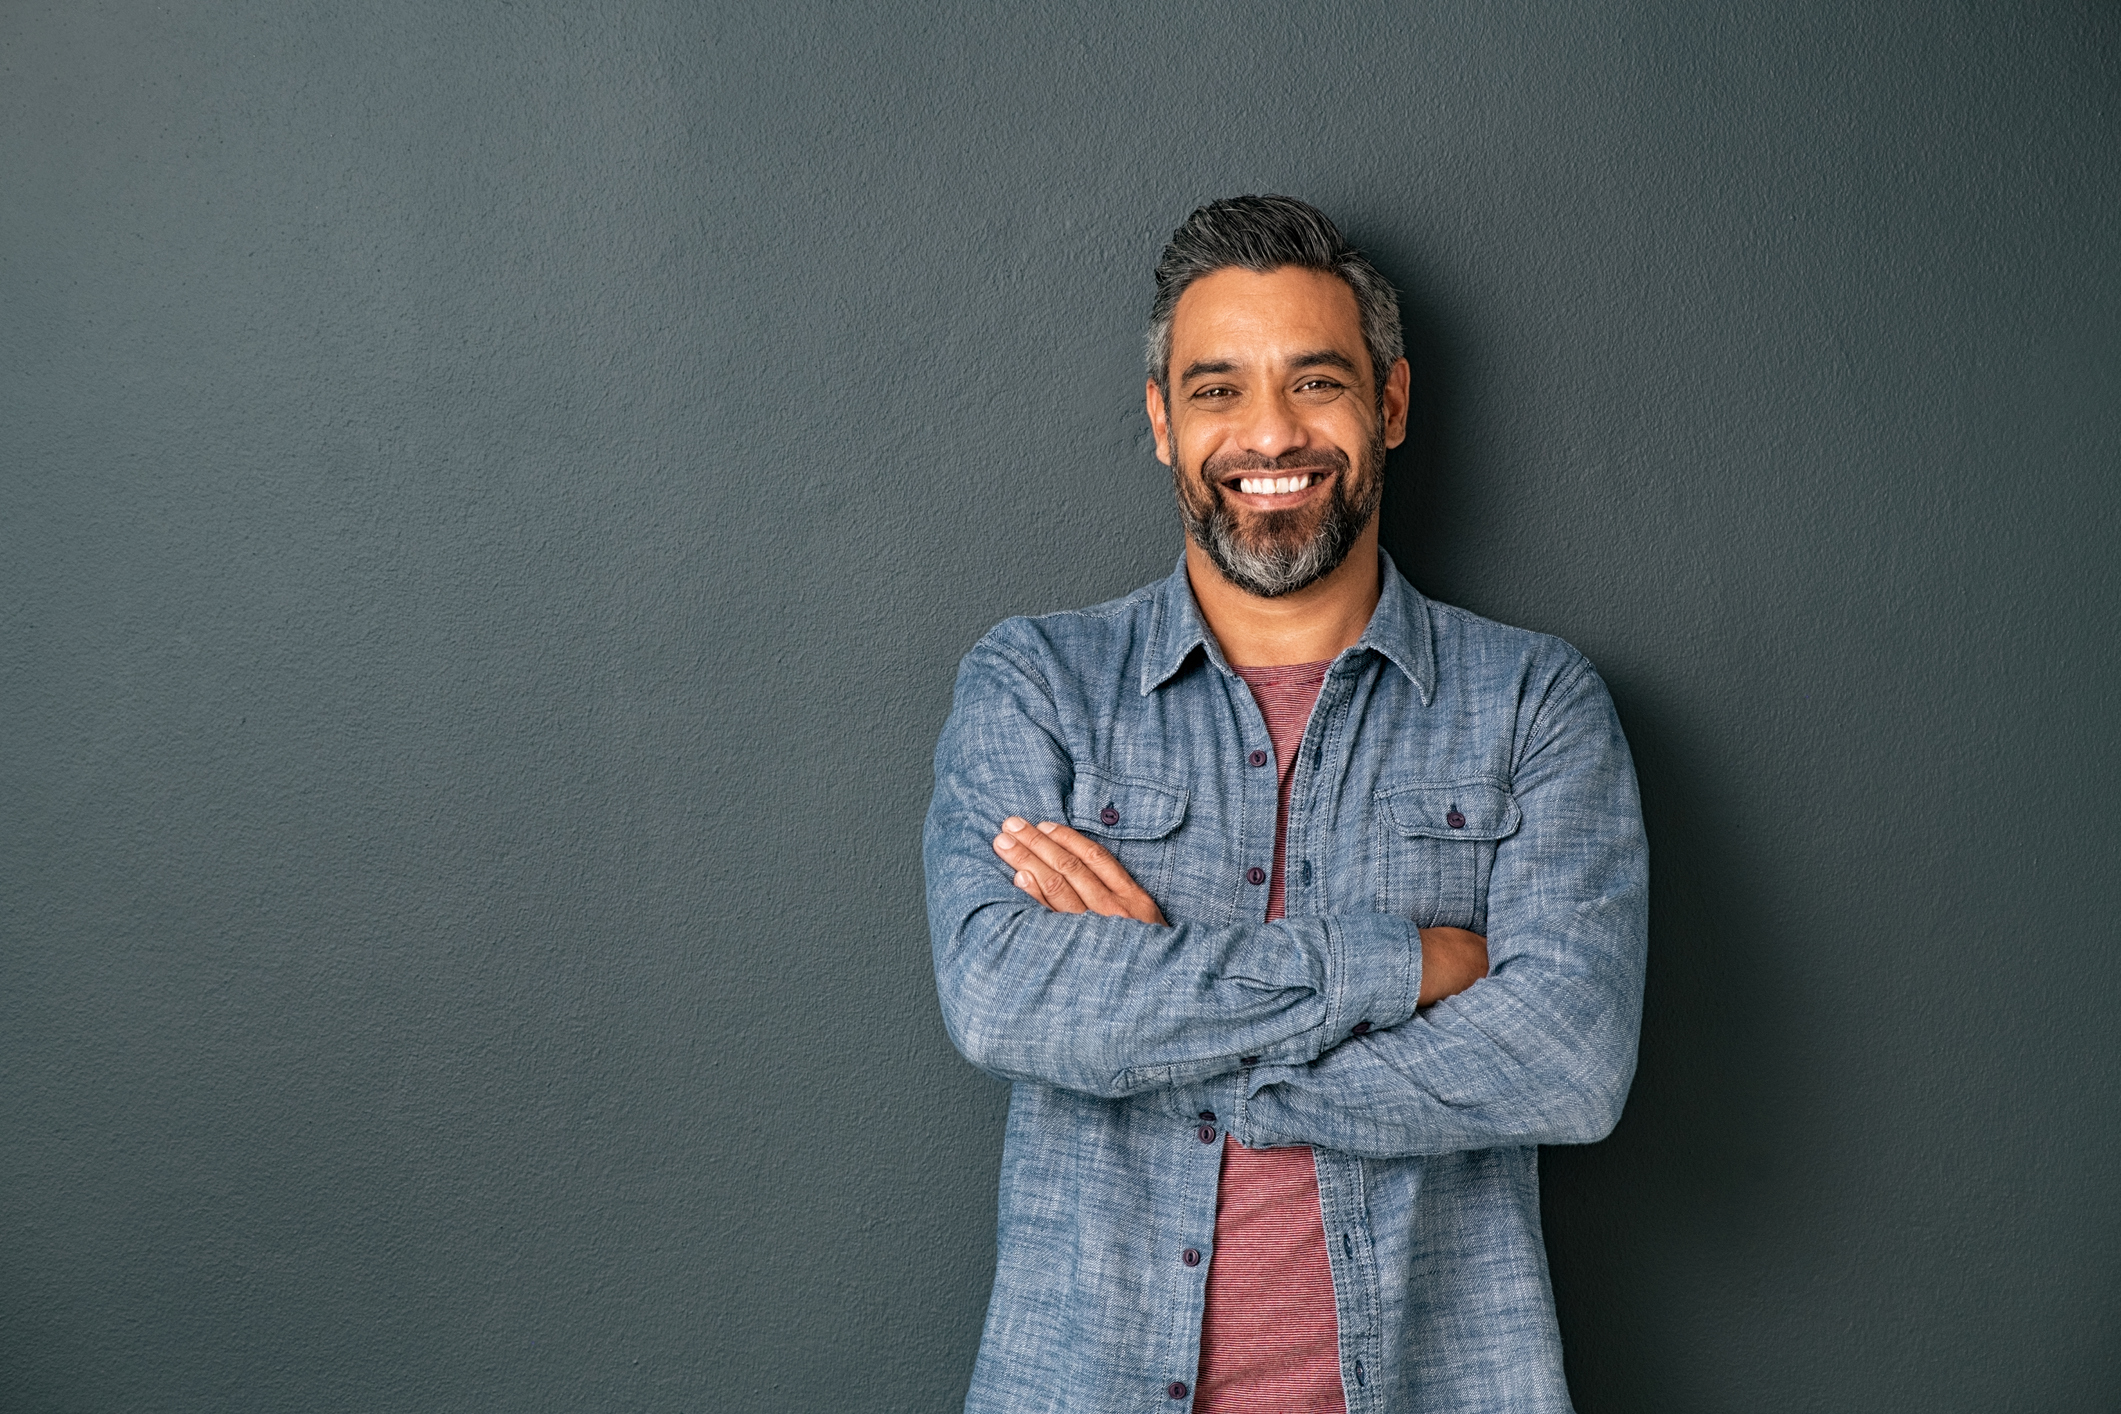 Smiling mature man on grey background